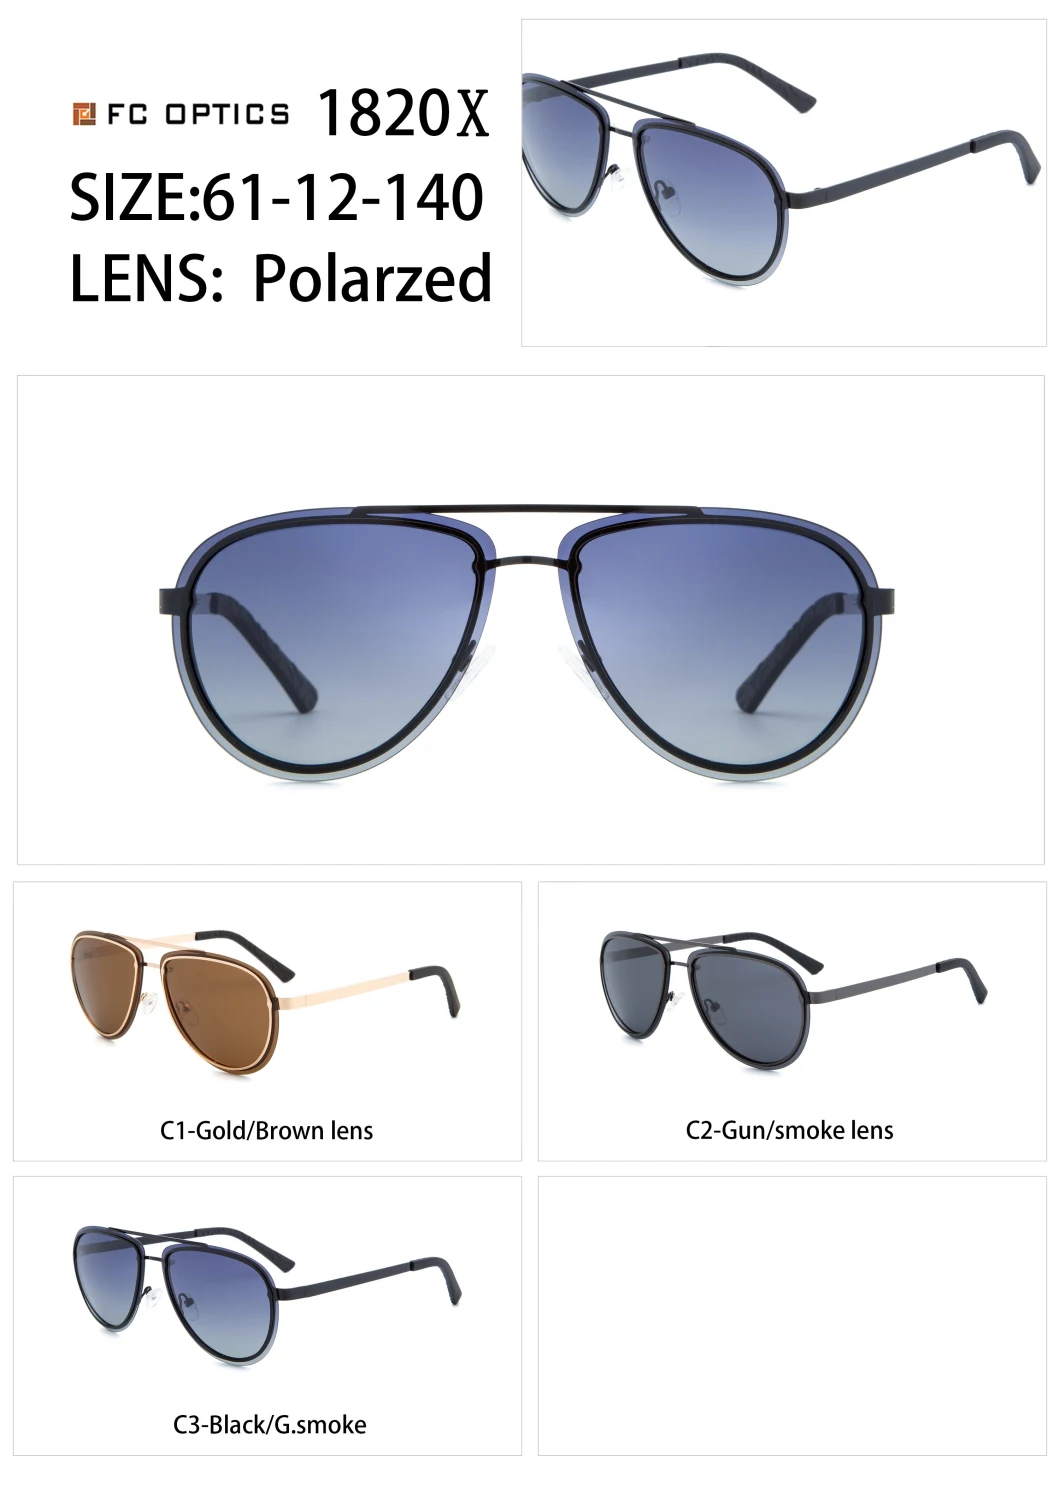 New Sunglasses 2020, Oversize Sunglasses Polarized for Women and Men